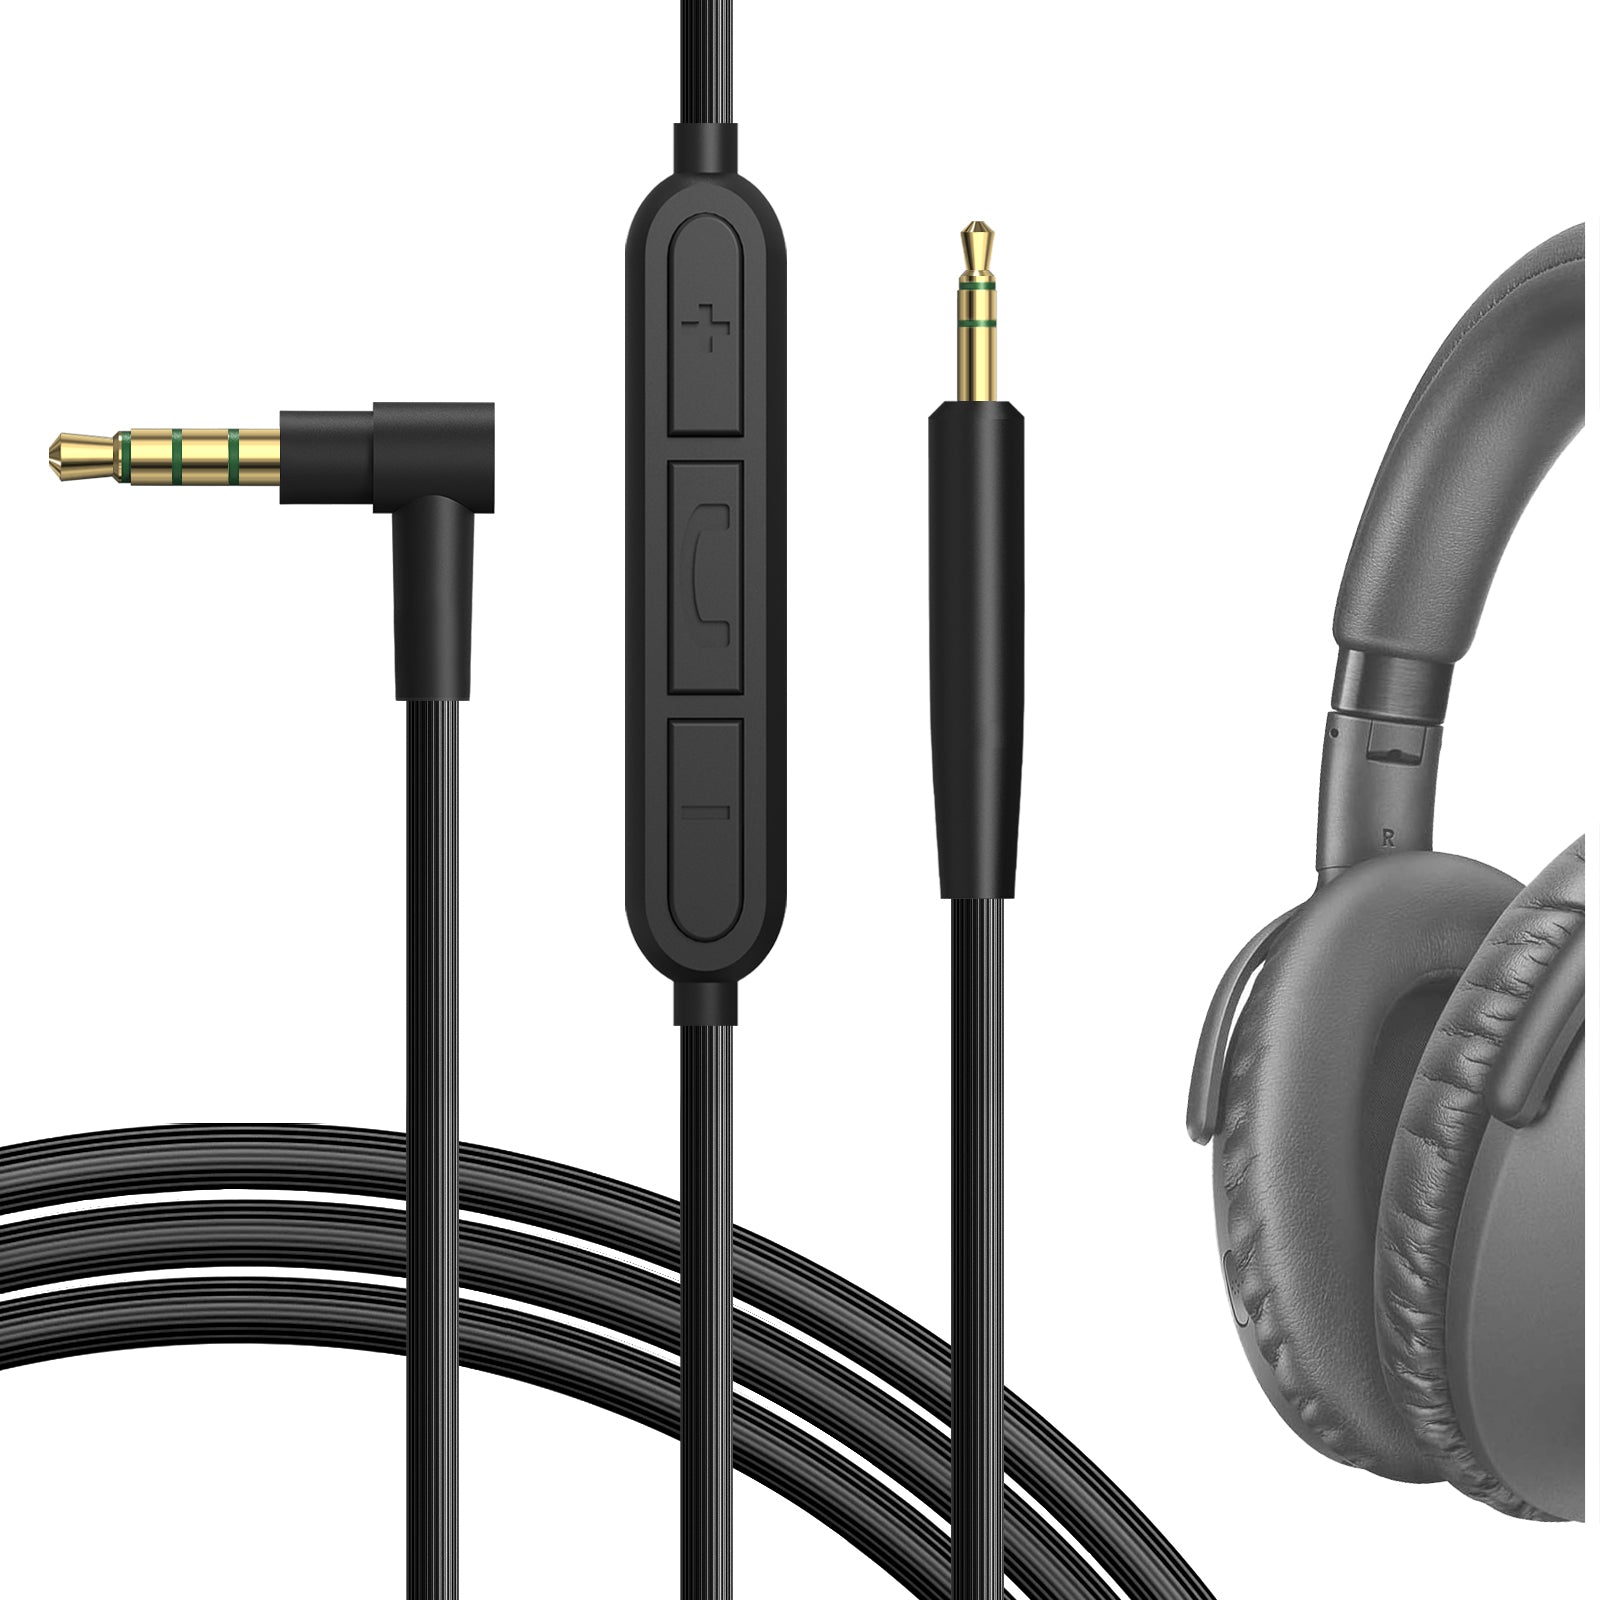 Sennheiser HD 599 SE Headphone with microphone - Black